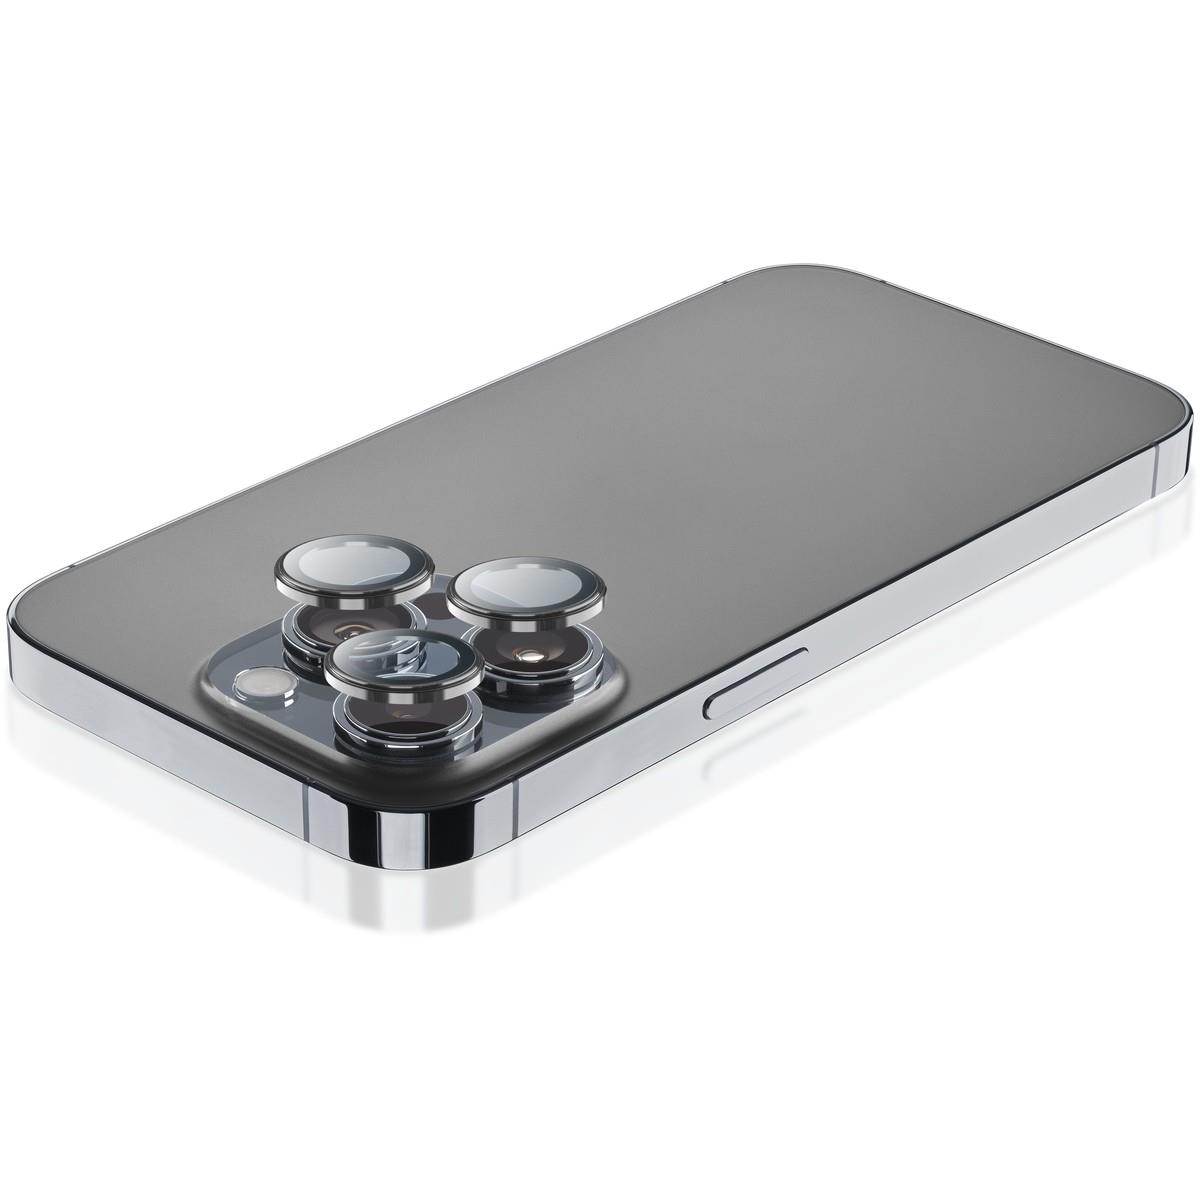 Schutzglas CAMERA LENS RING für Apple iPhone 15 Pro/15 Pro Max